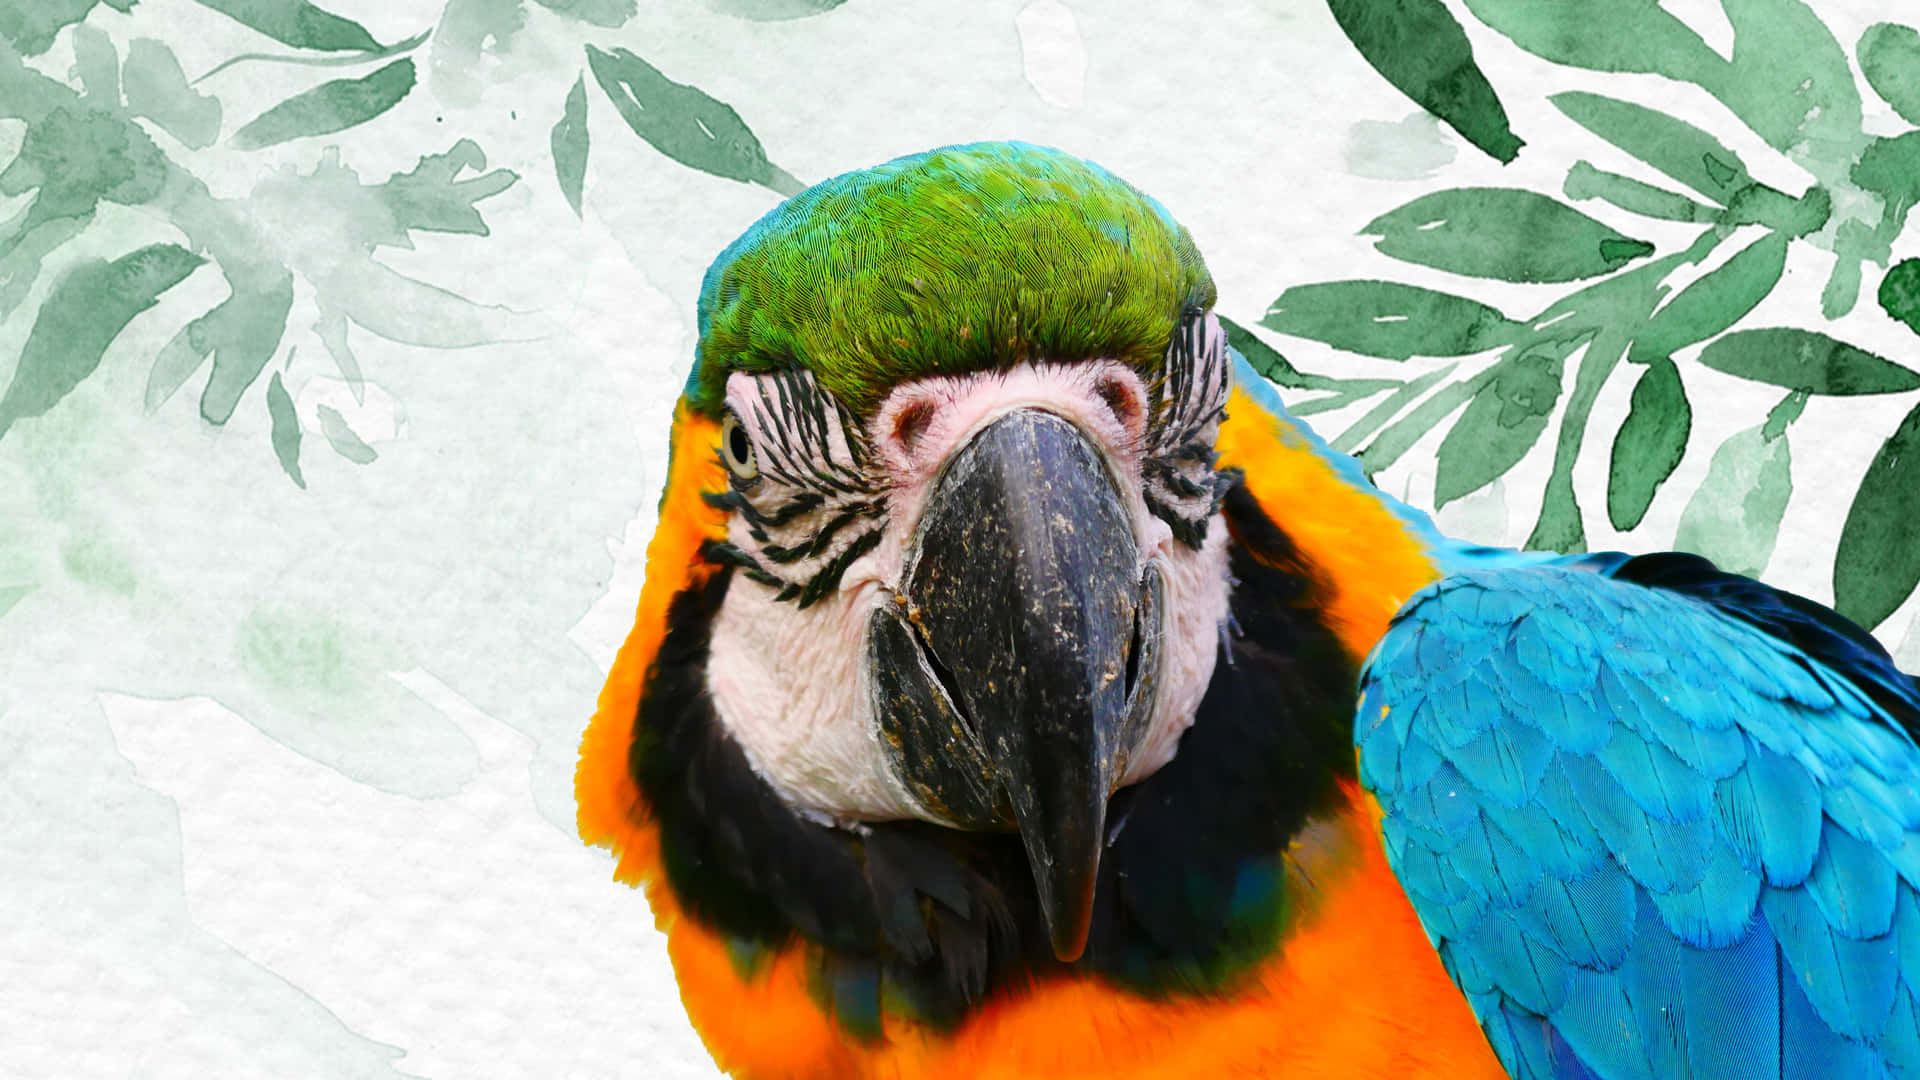 Parrot Art IPhone Wallpaper HD  IPhone Wallpapers  iPhone Wallpapers